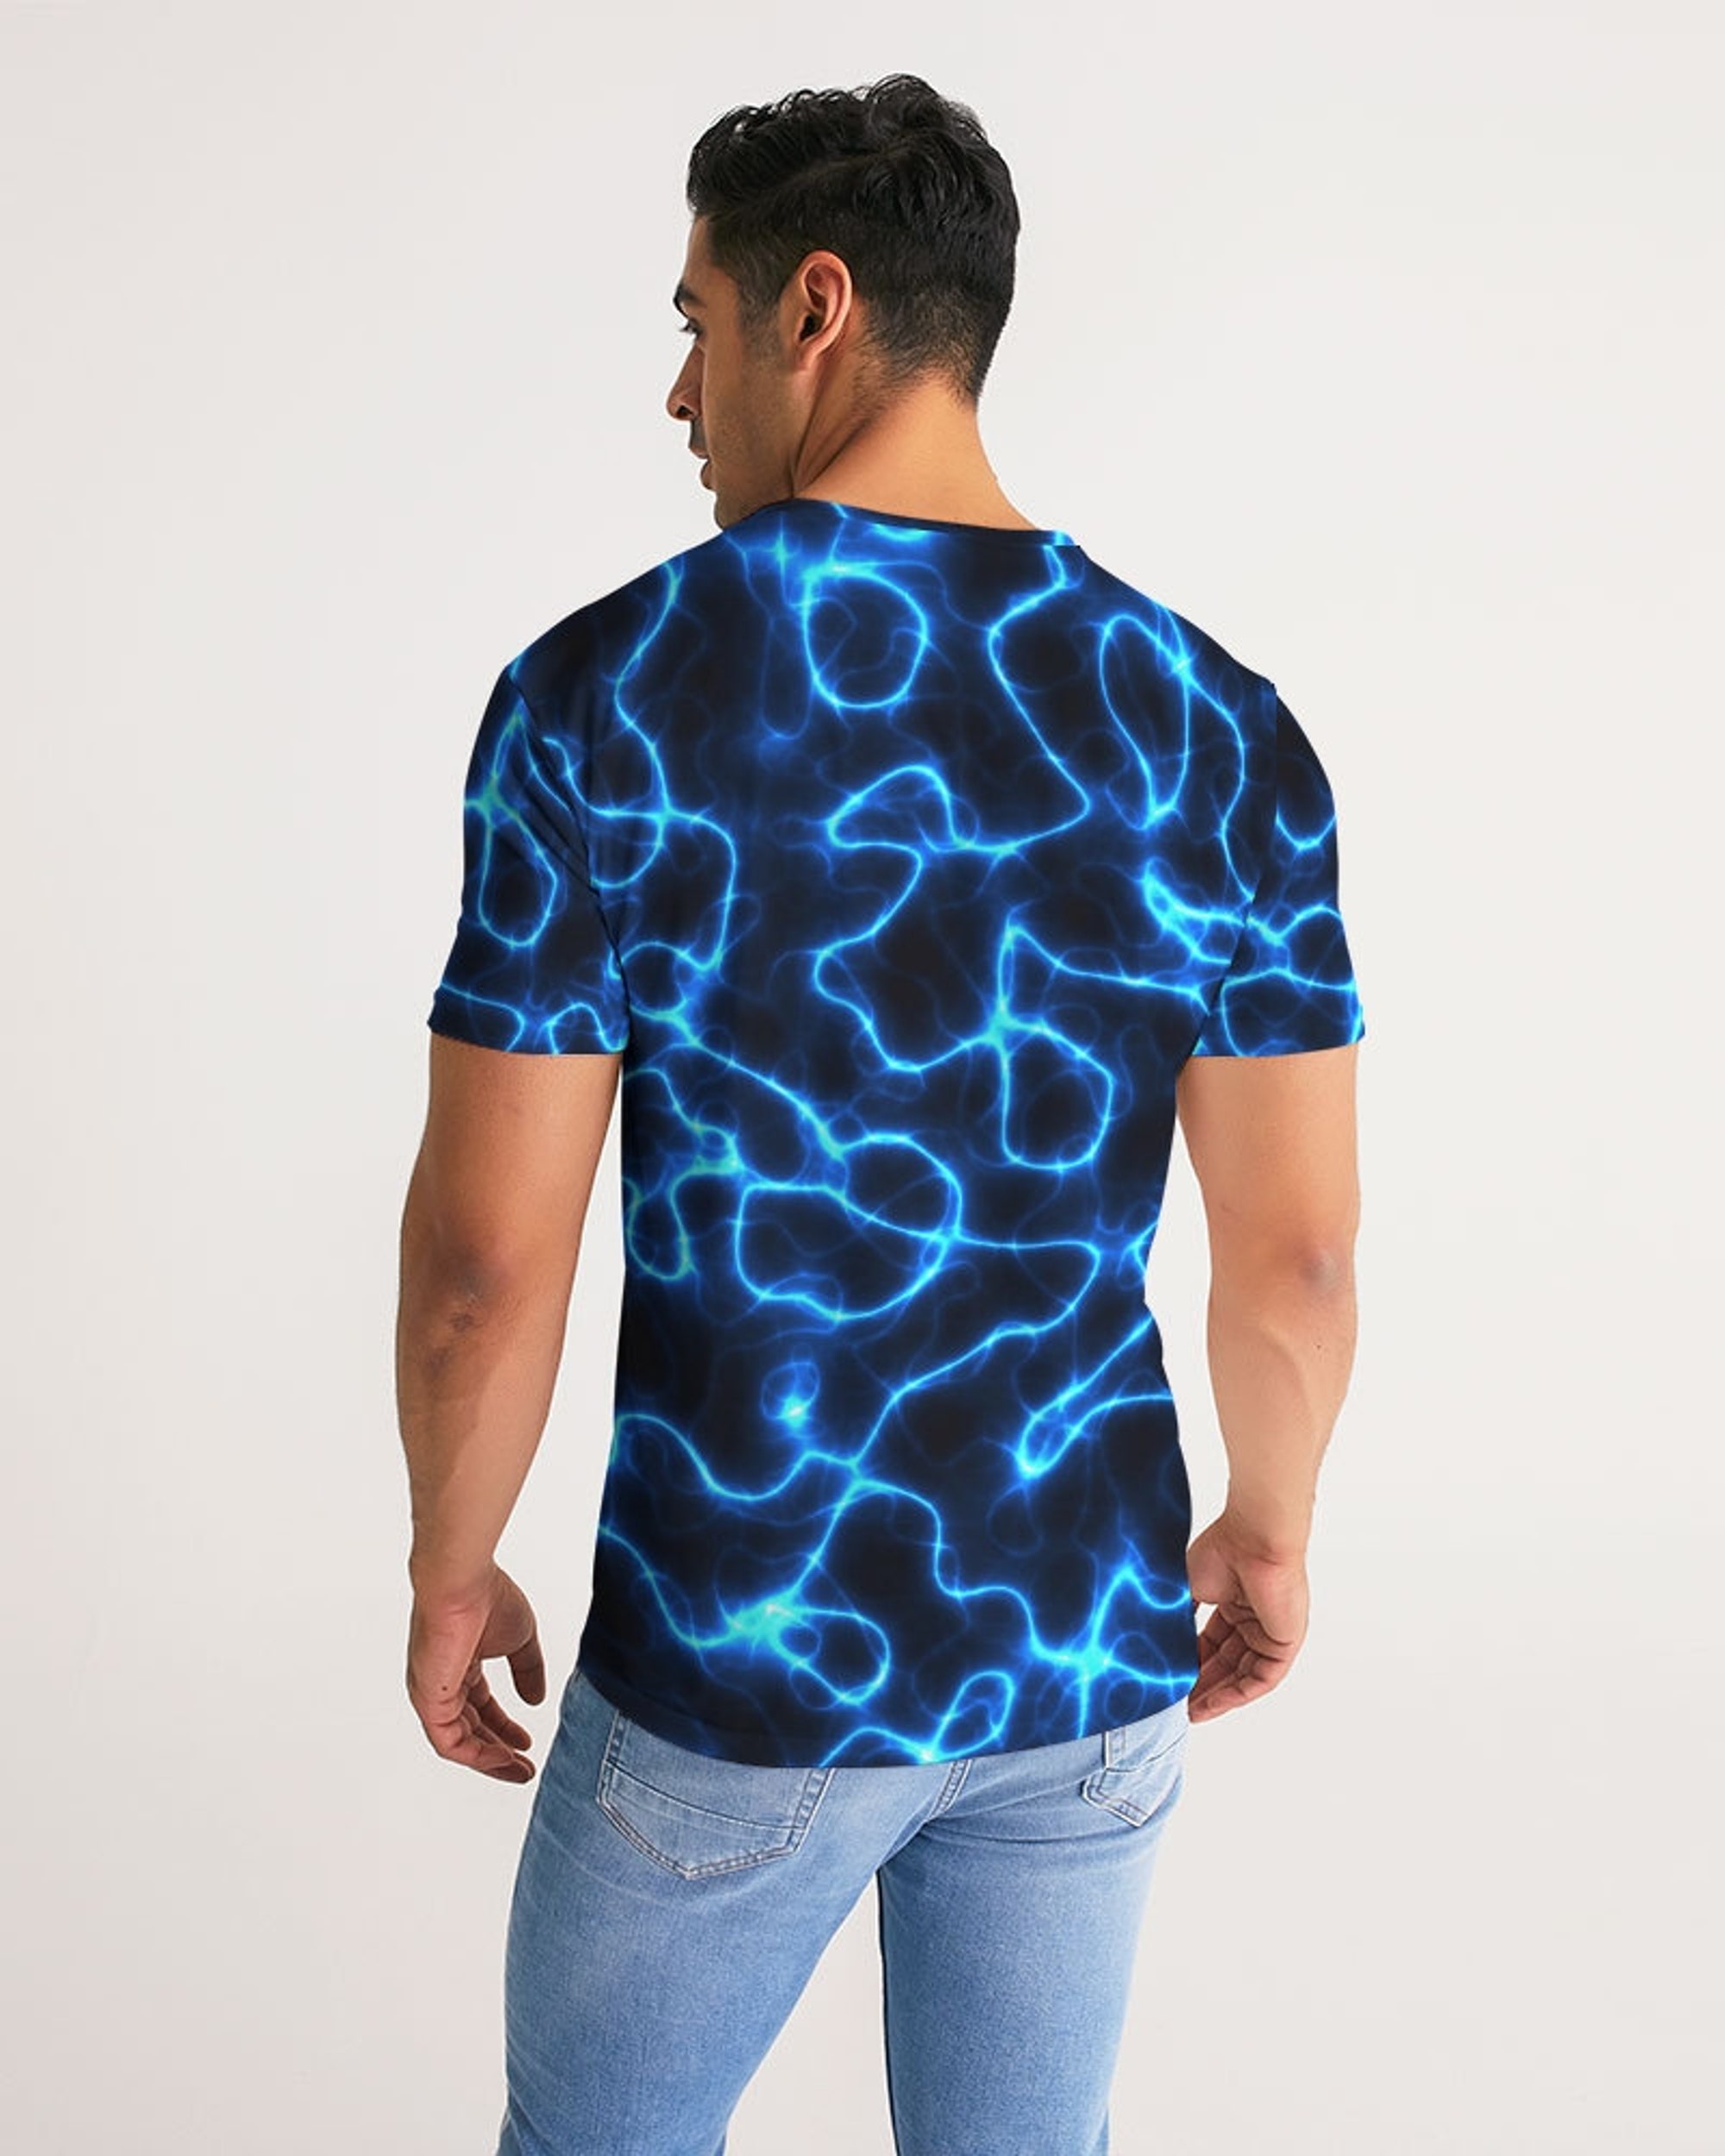 Rave Electric Blue Lightning 3D T Shirt